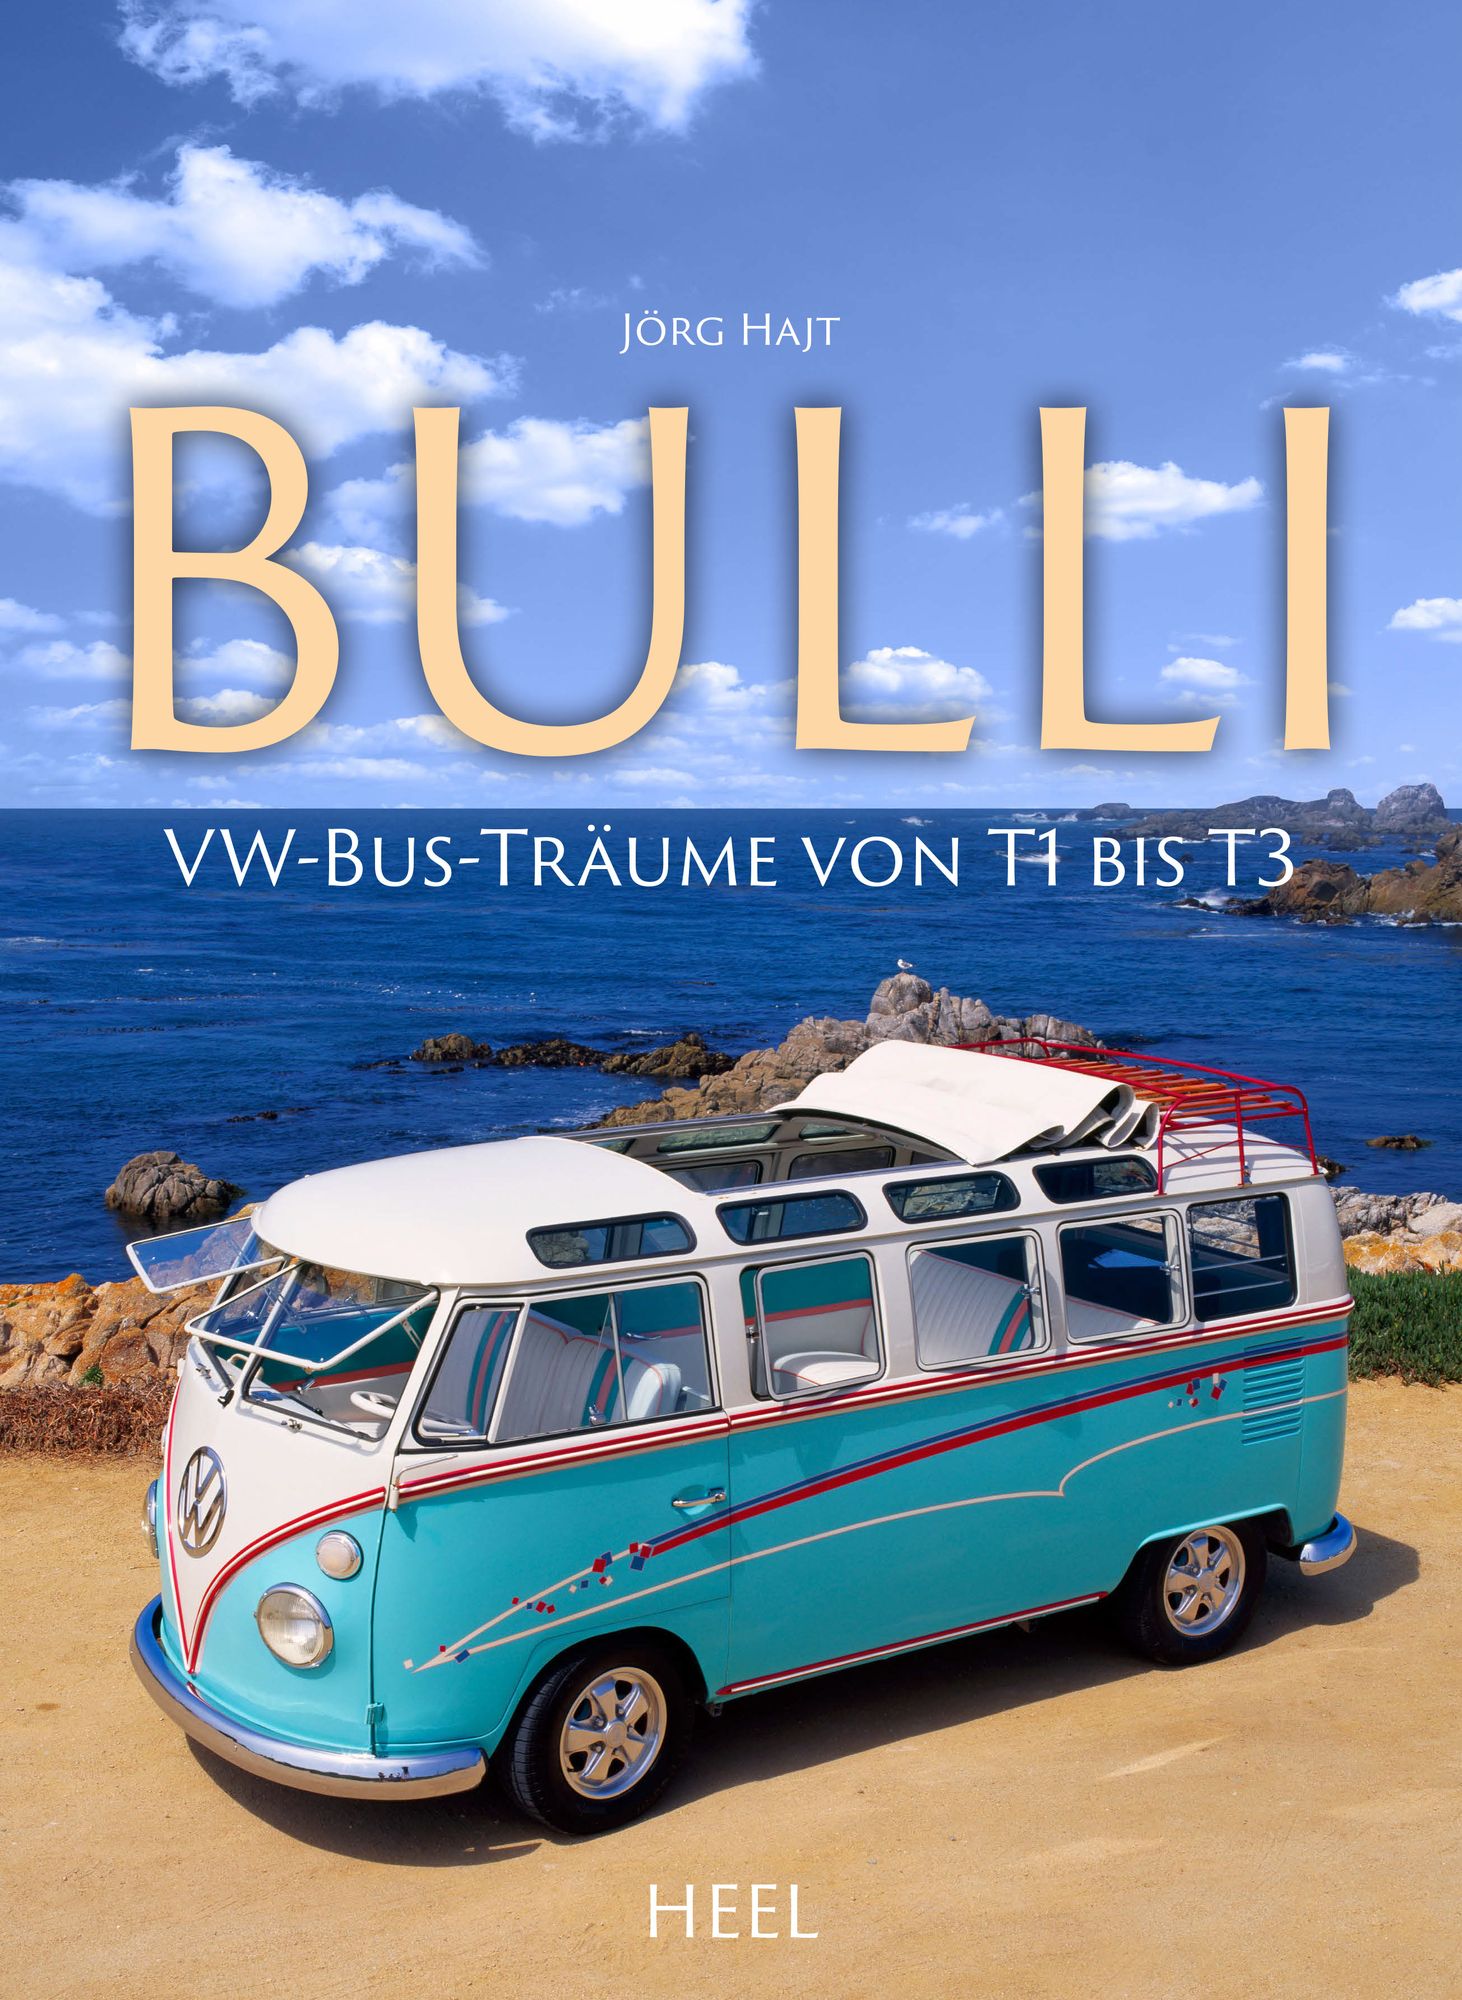 Das perfekte Männergeschenk: VW Bulli Bilderrahmen